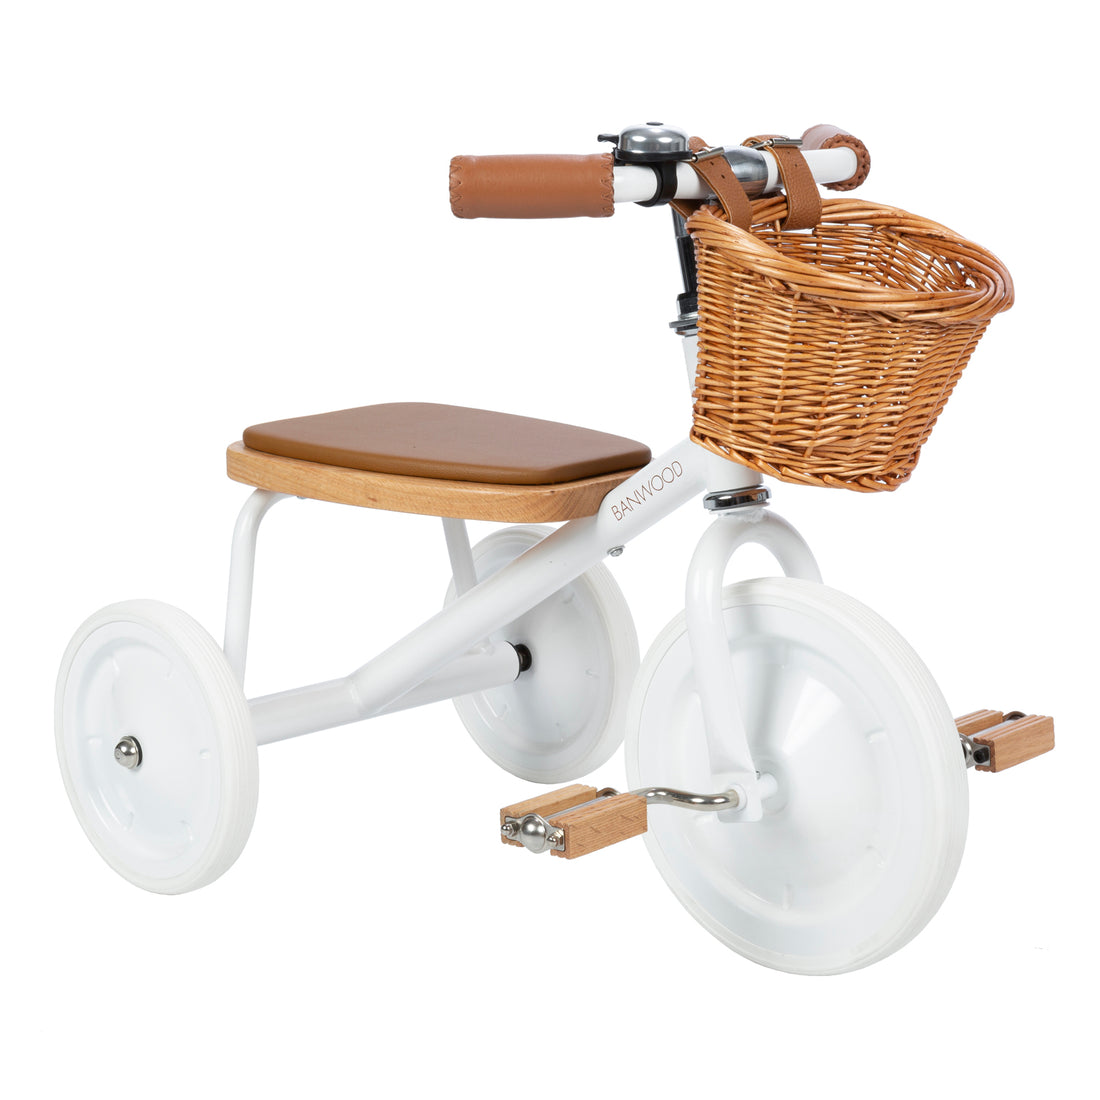 Banwood Trike (and basket)- White